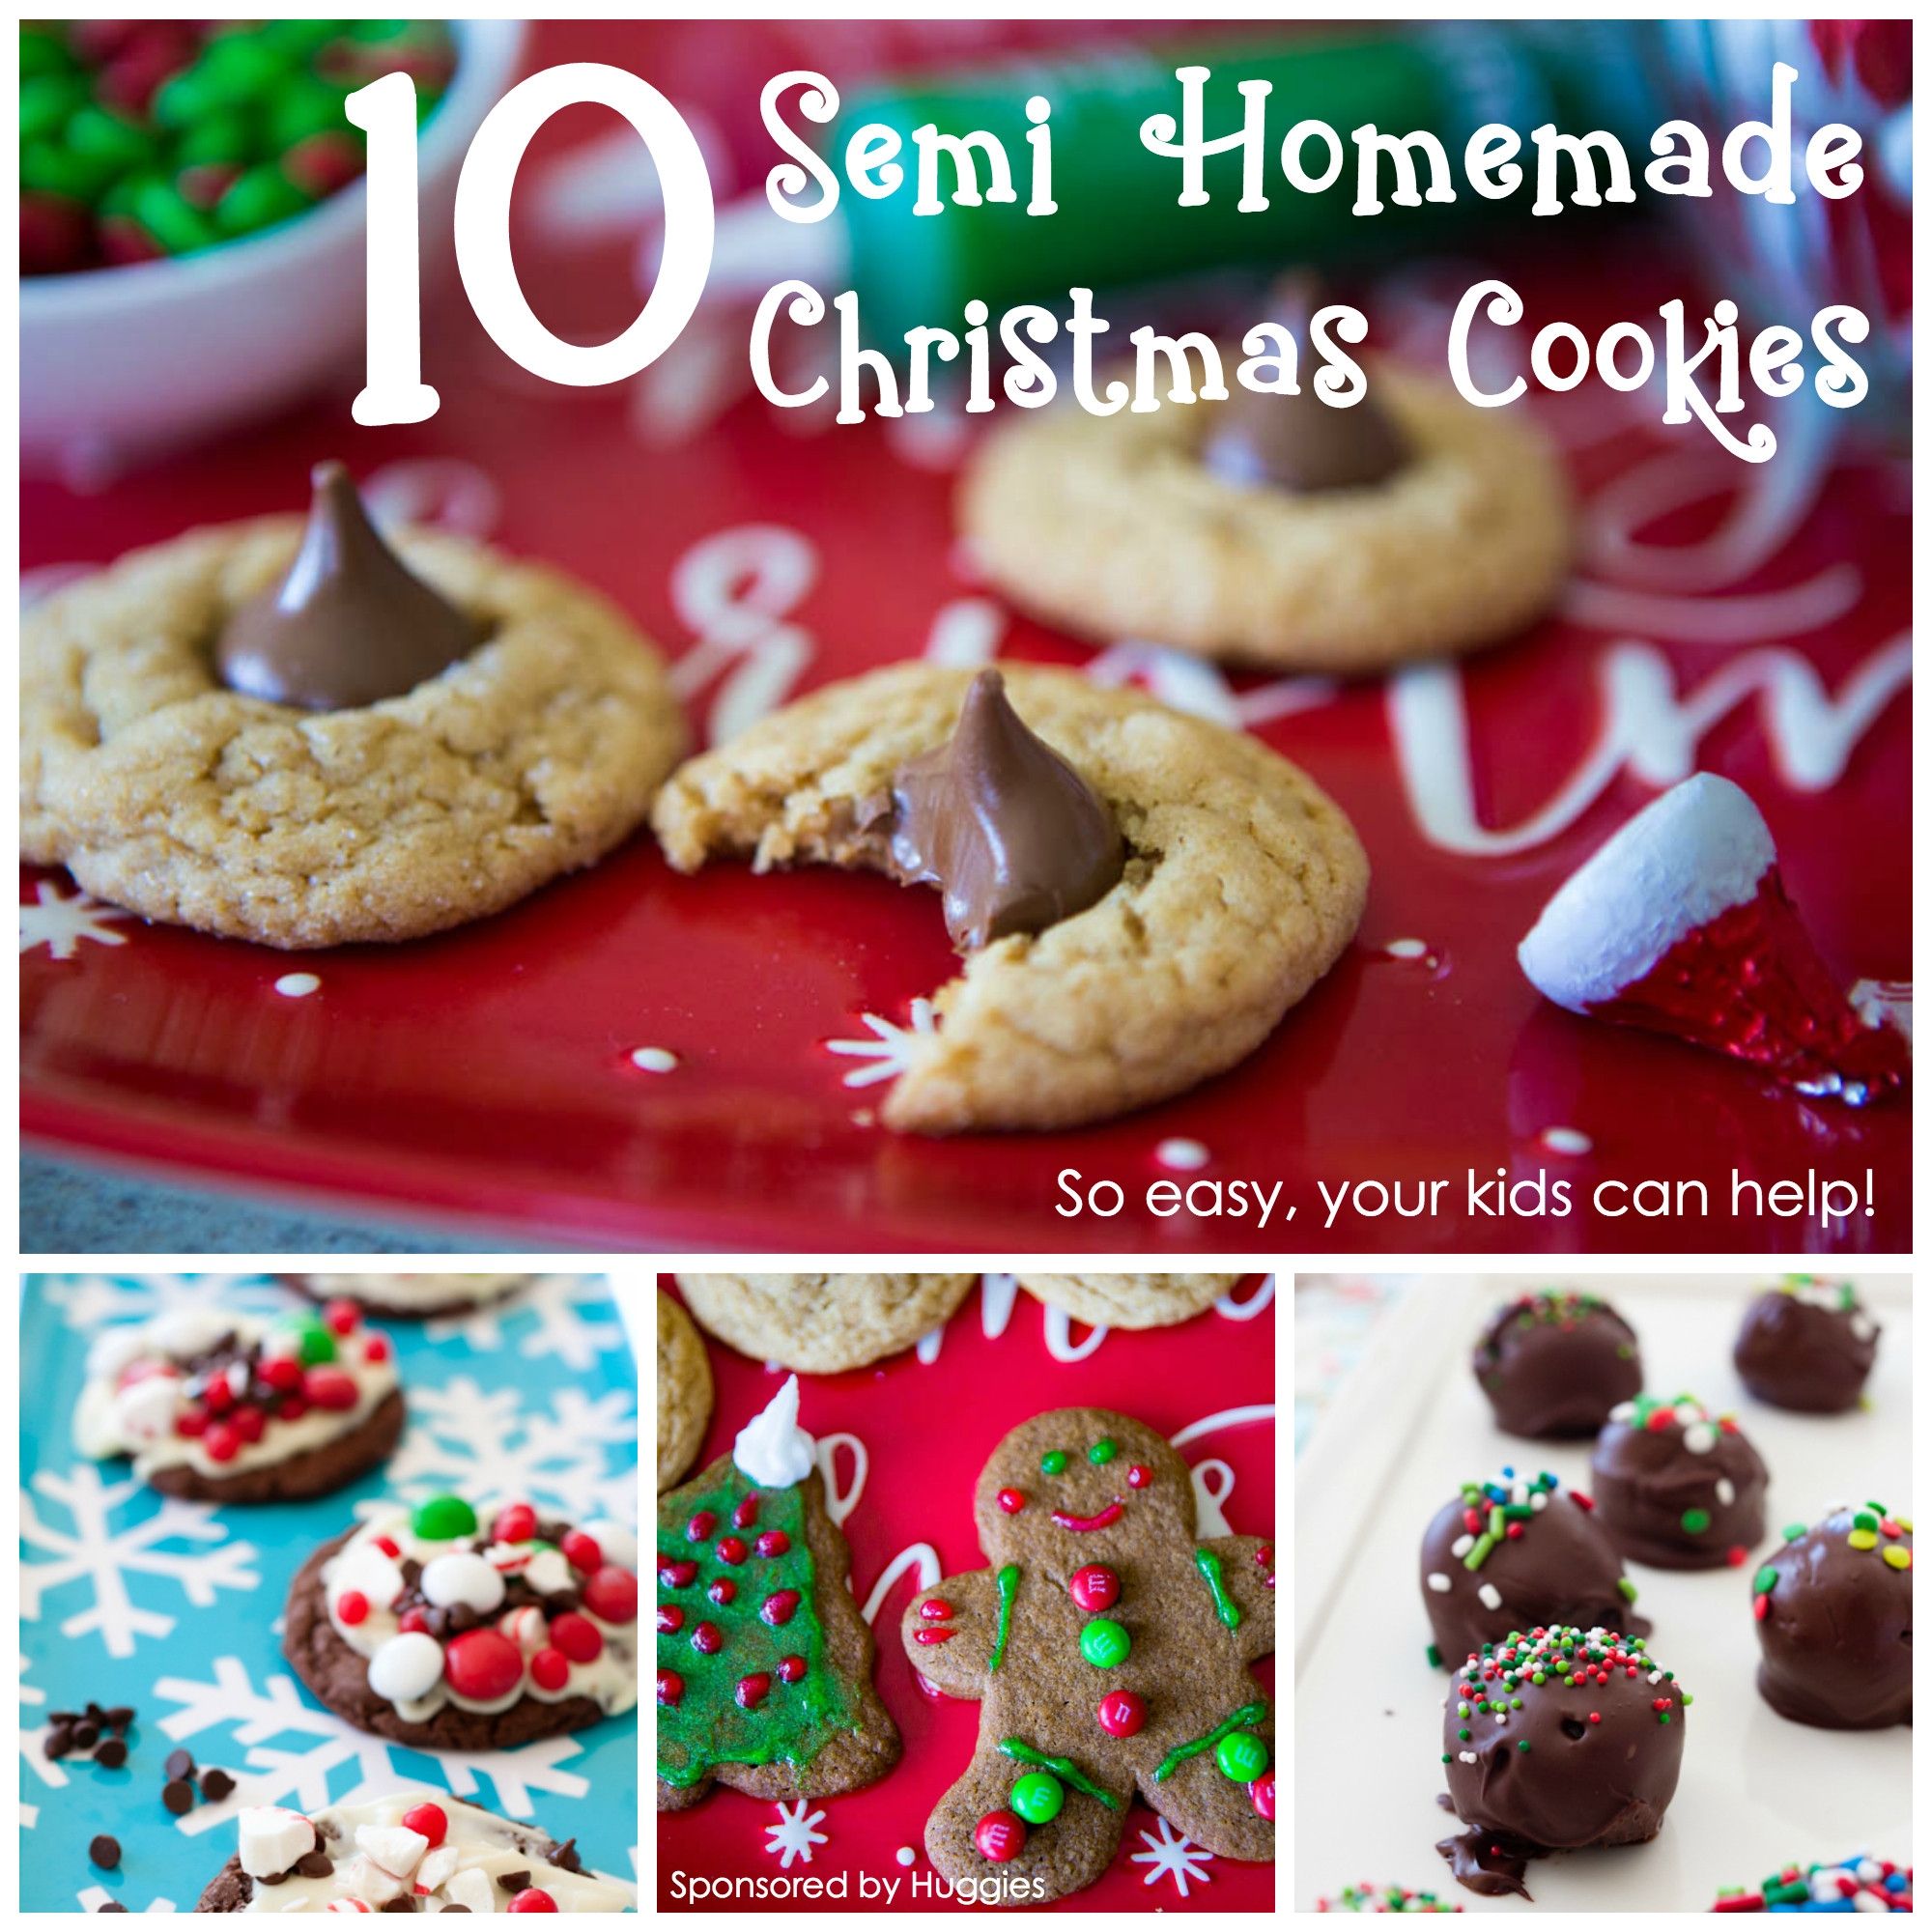 Homemade Christmas Cookies
 10 semi homemade Christmas cookies that will save your sanity